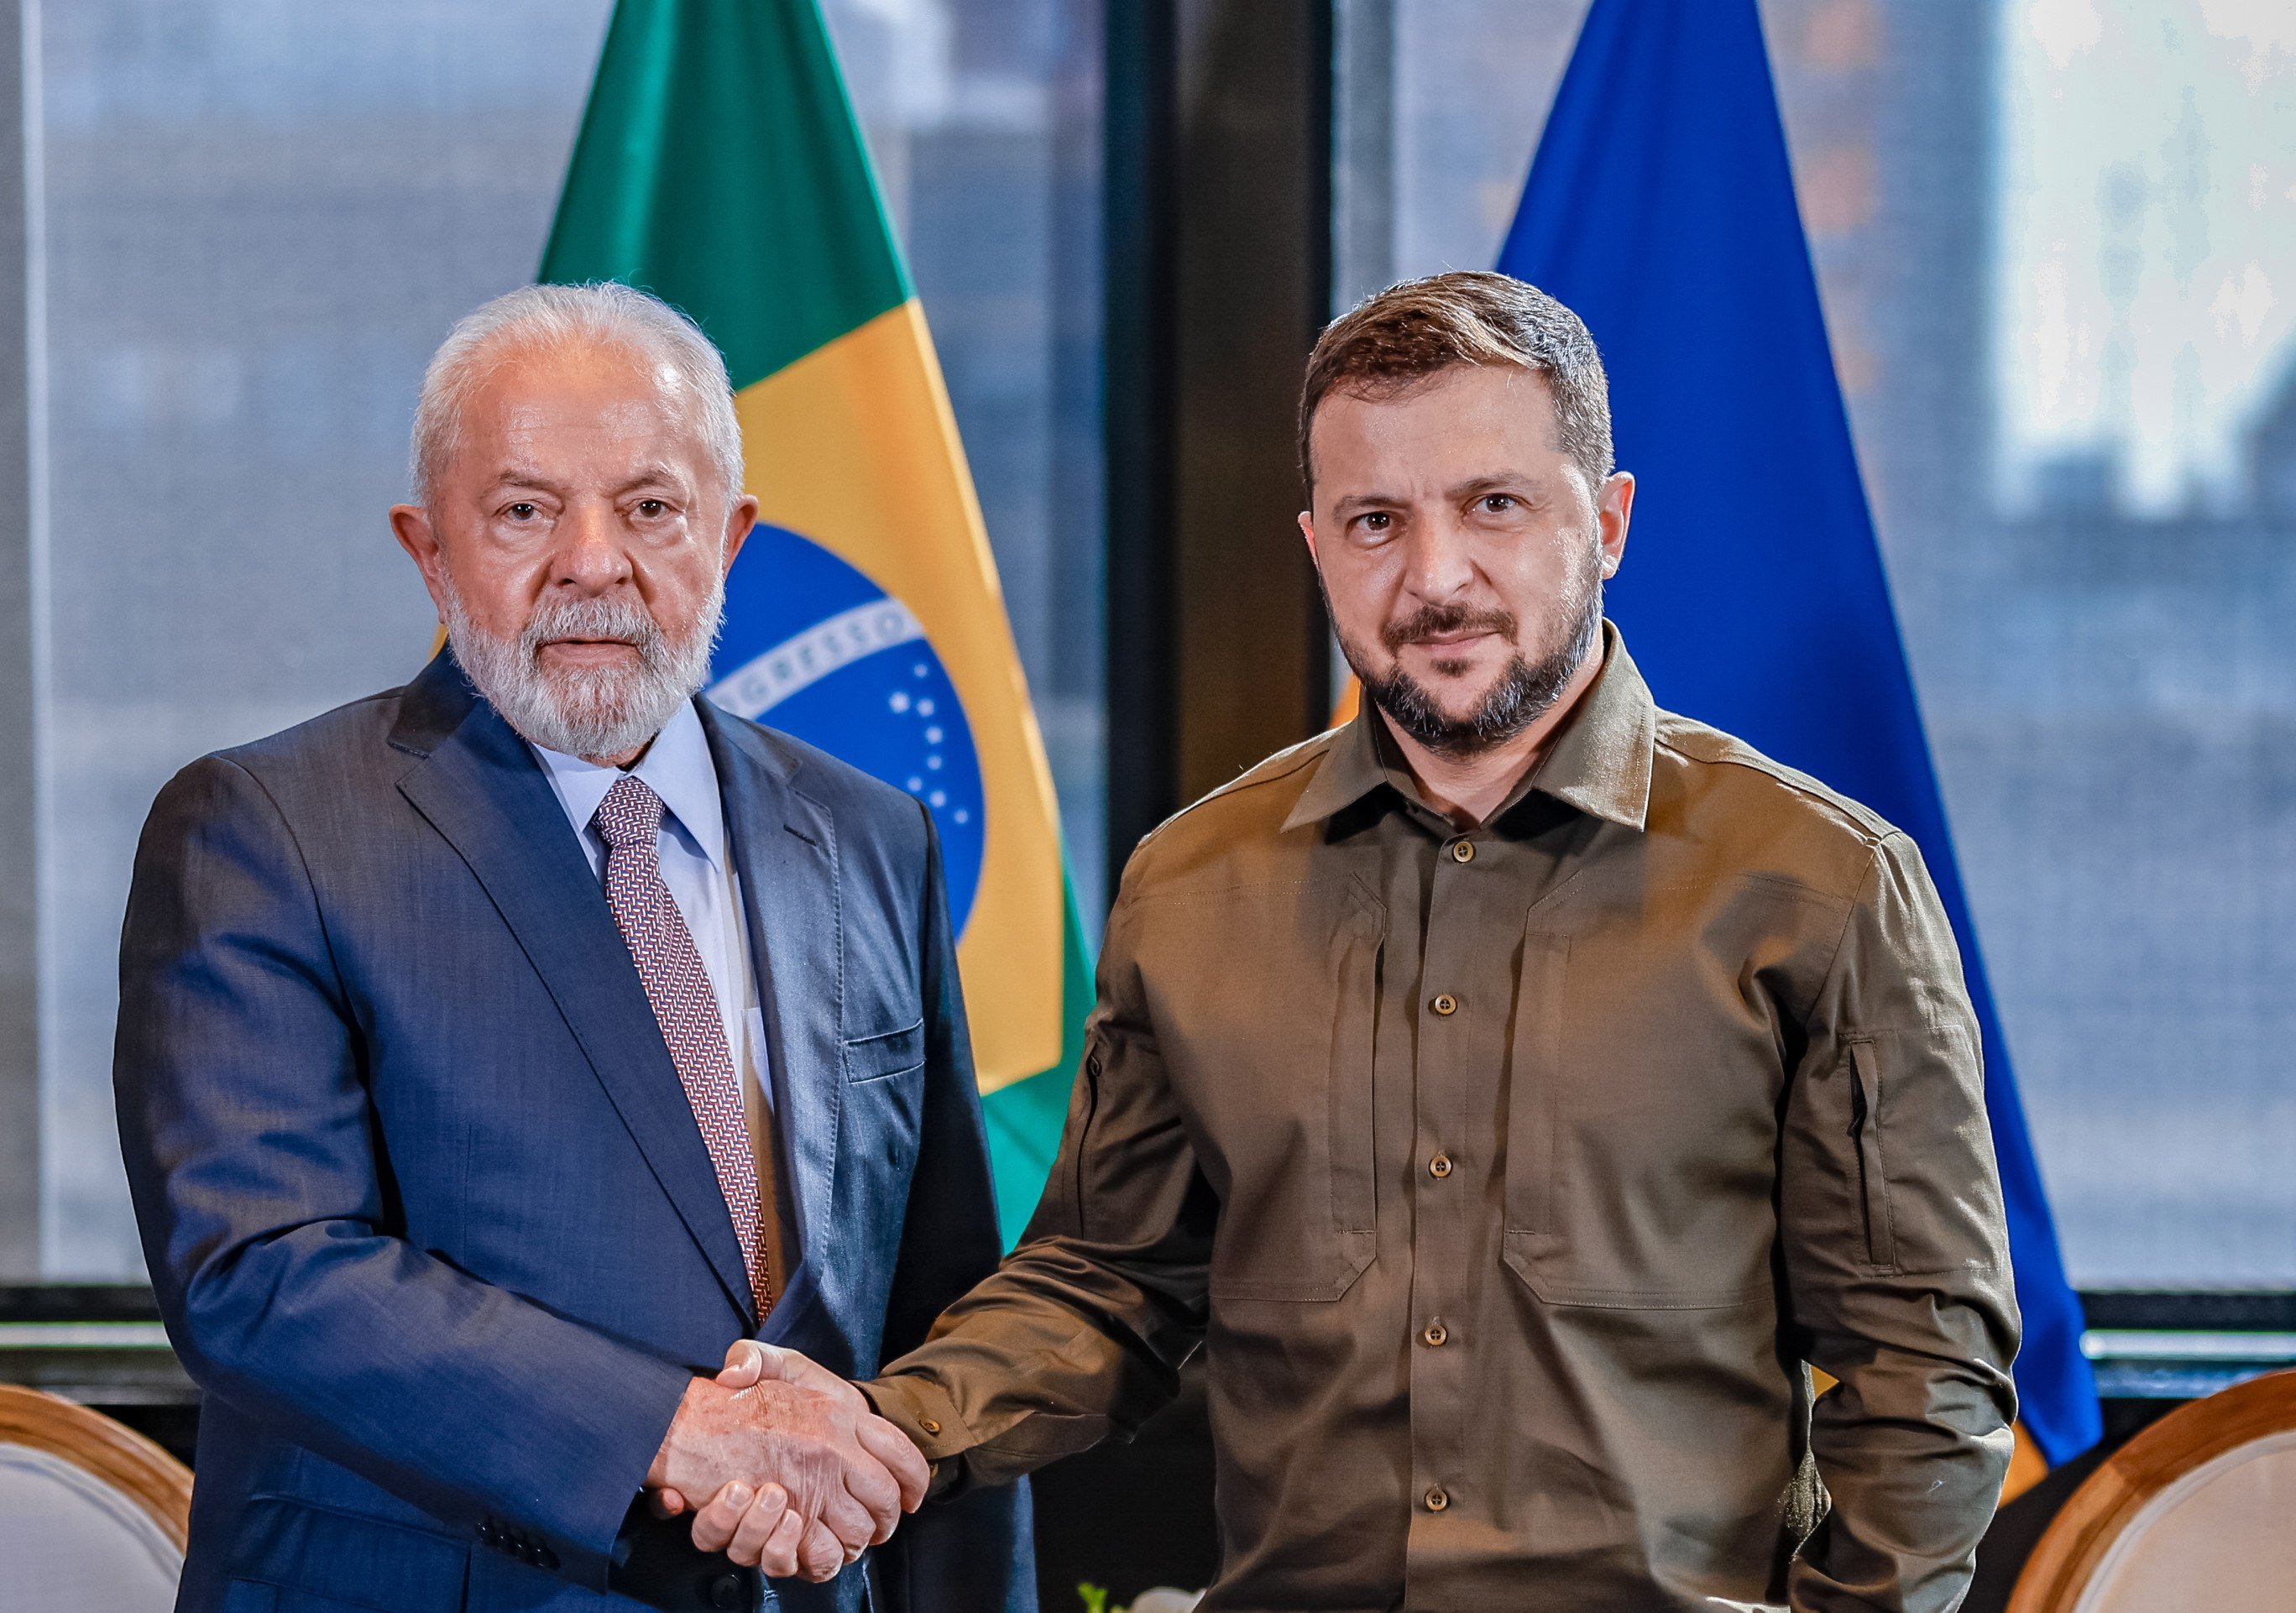 Brazilian President Luiz Inacio Lula da Silva (left) shakes hands with Ukrainian President Volodymyr Zelensky in New York on Wednesday. Photo: EPA-EFE